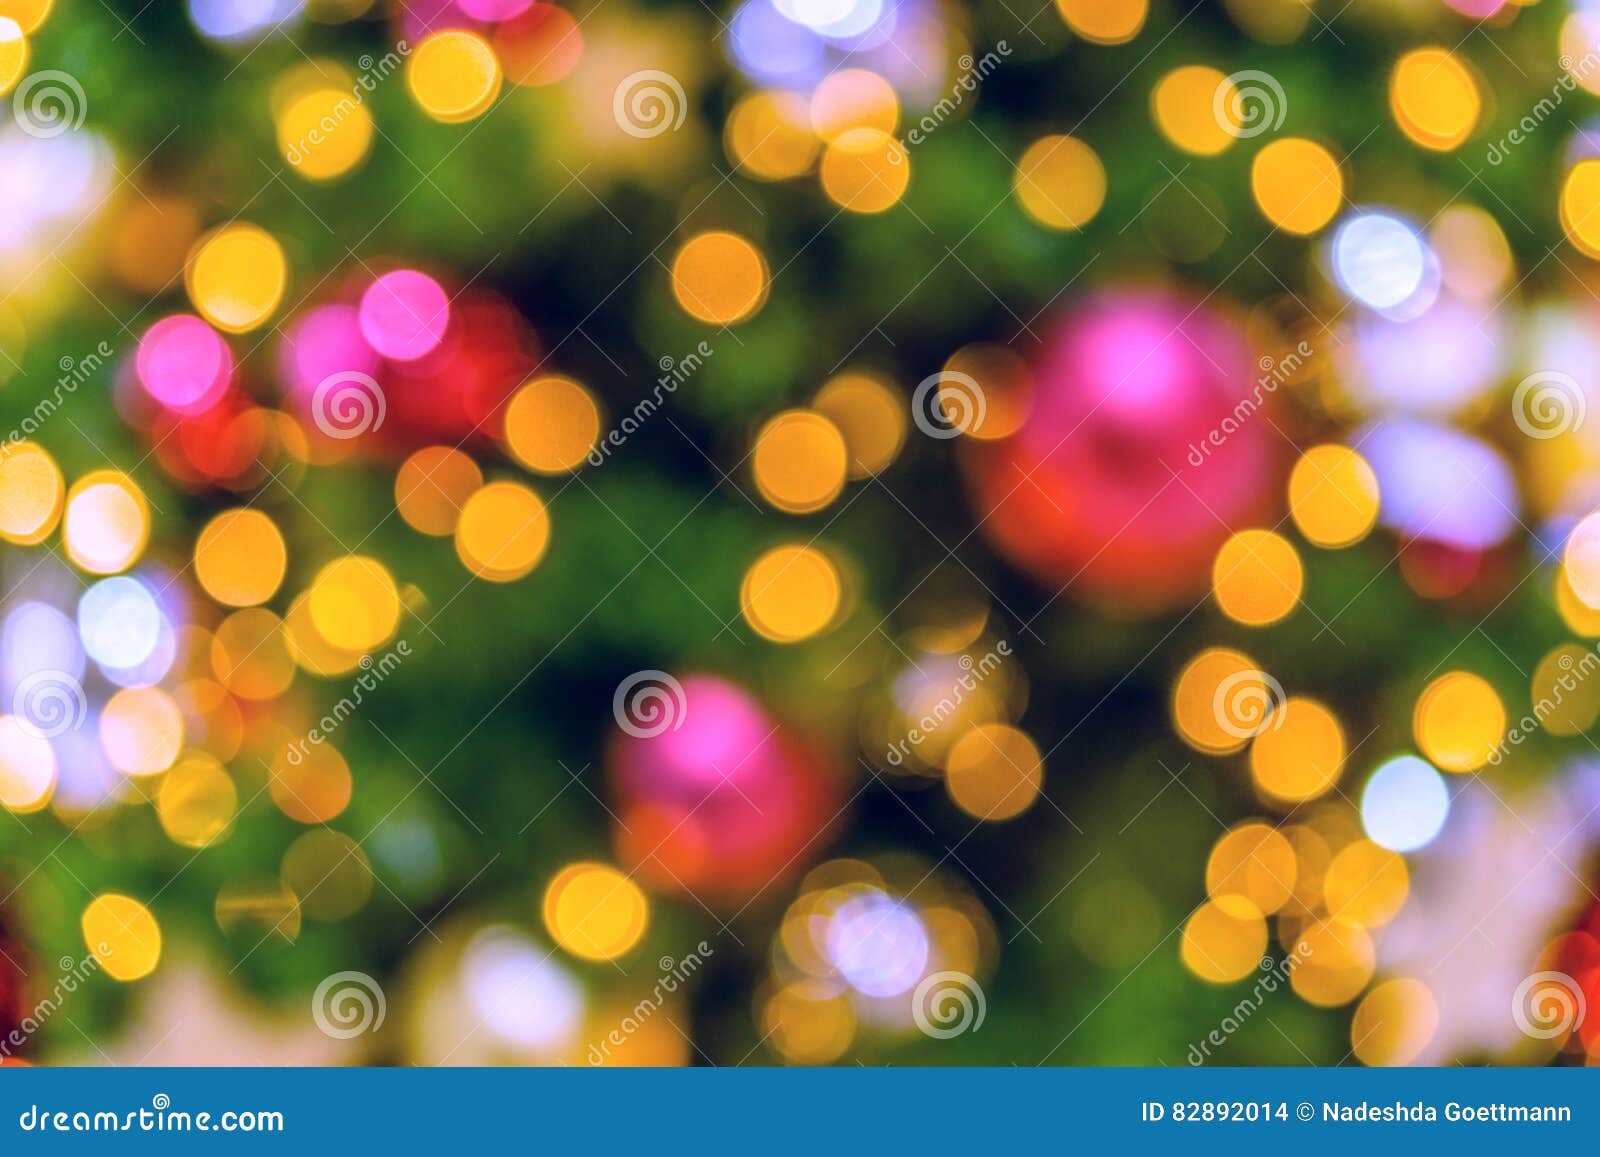 Christmas Tree Background. Bokeh Defocused Lights Stock Photo - Image ...